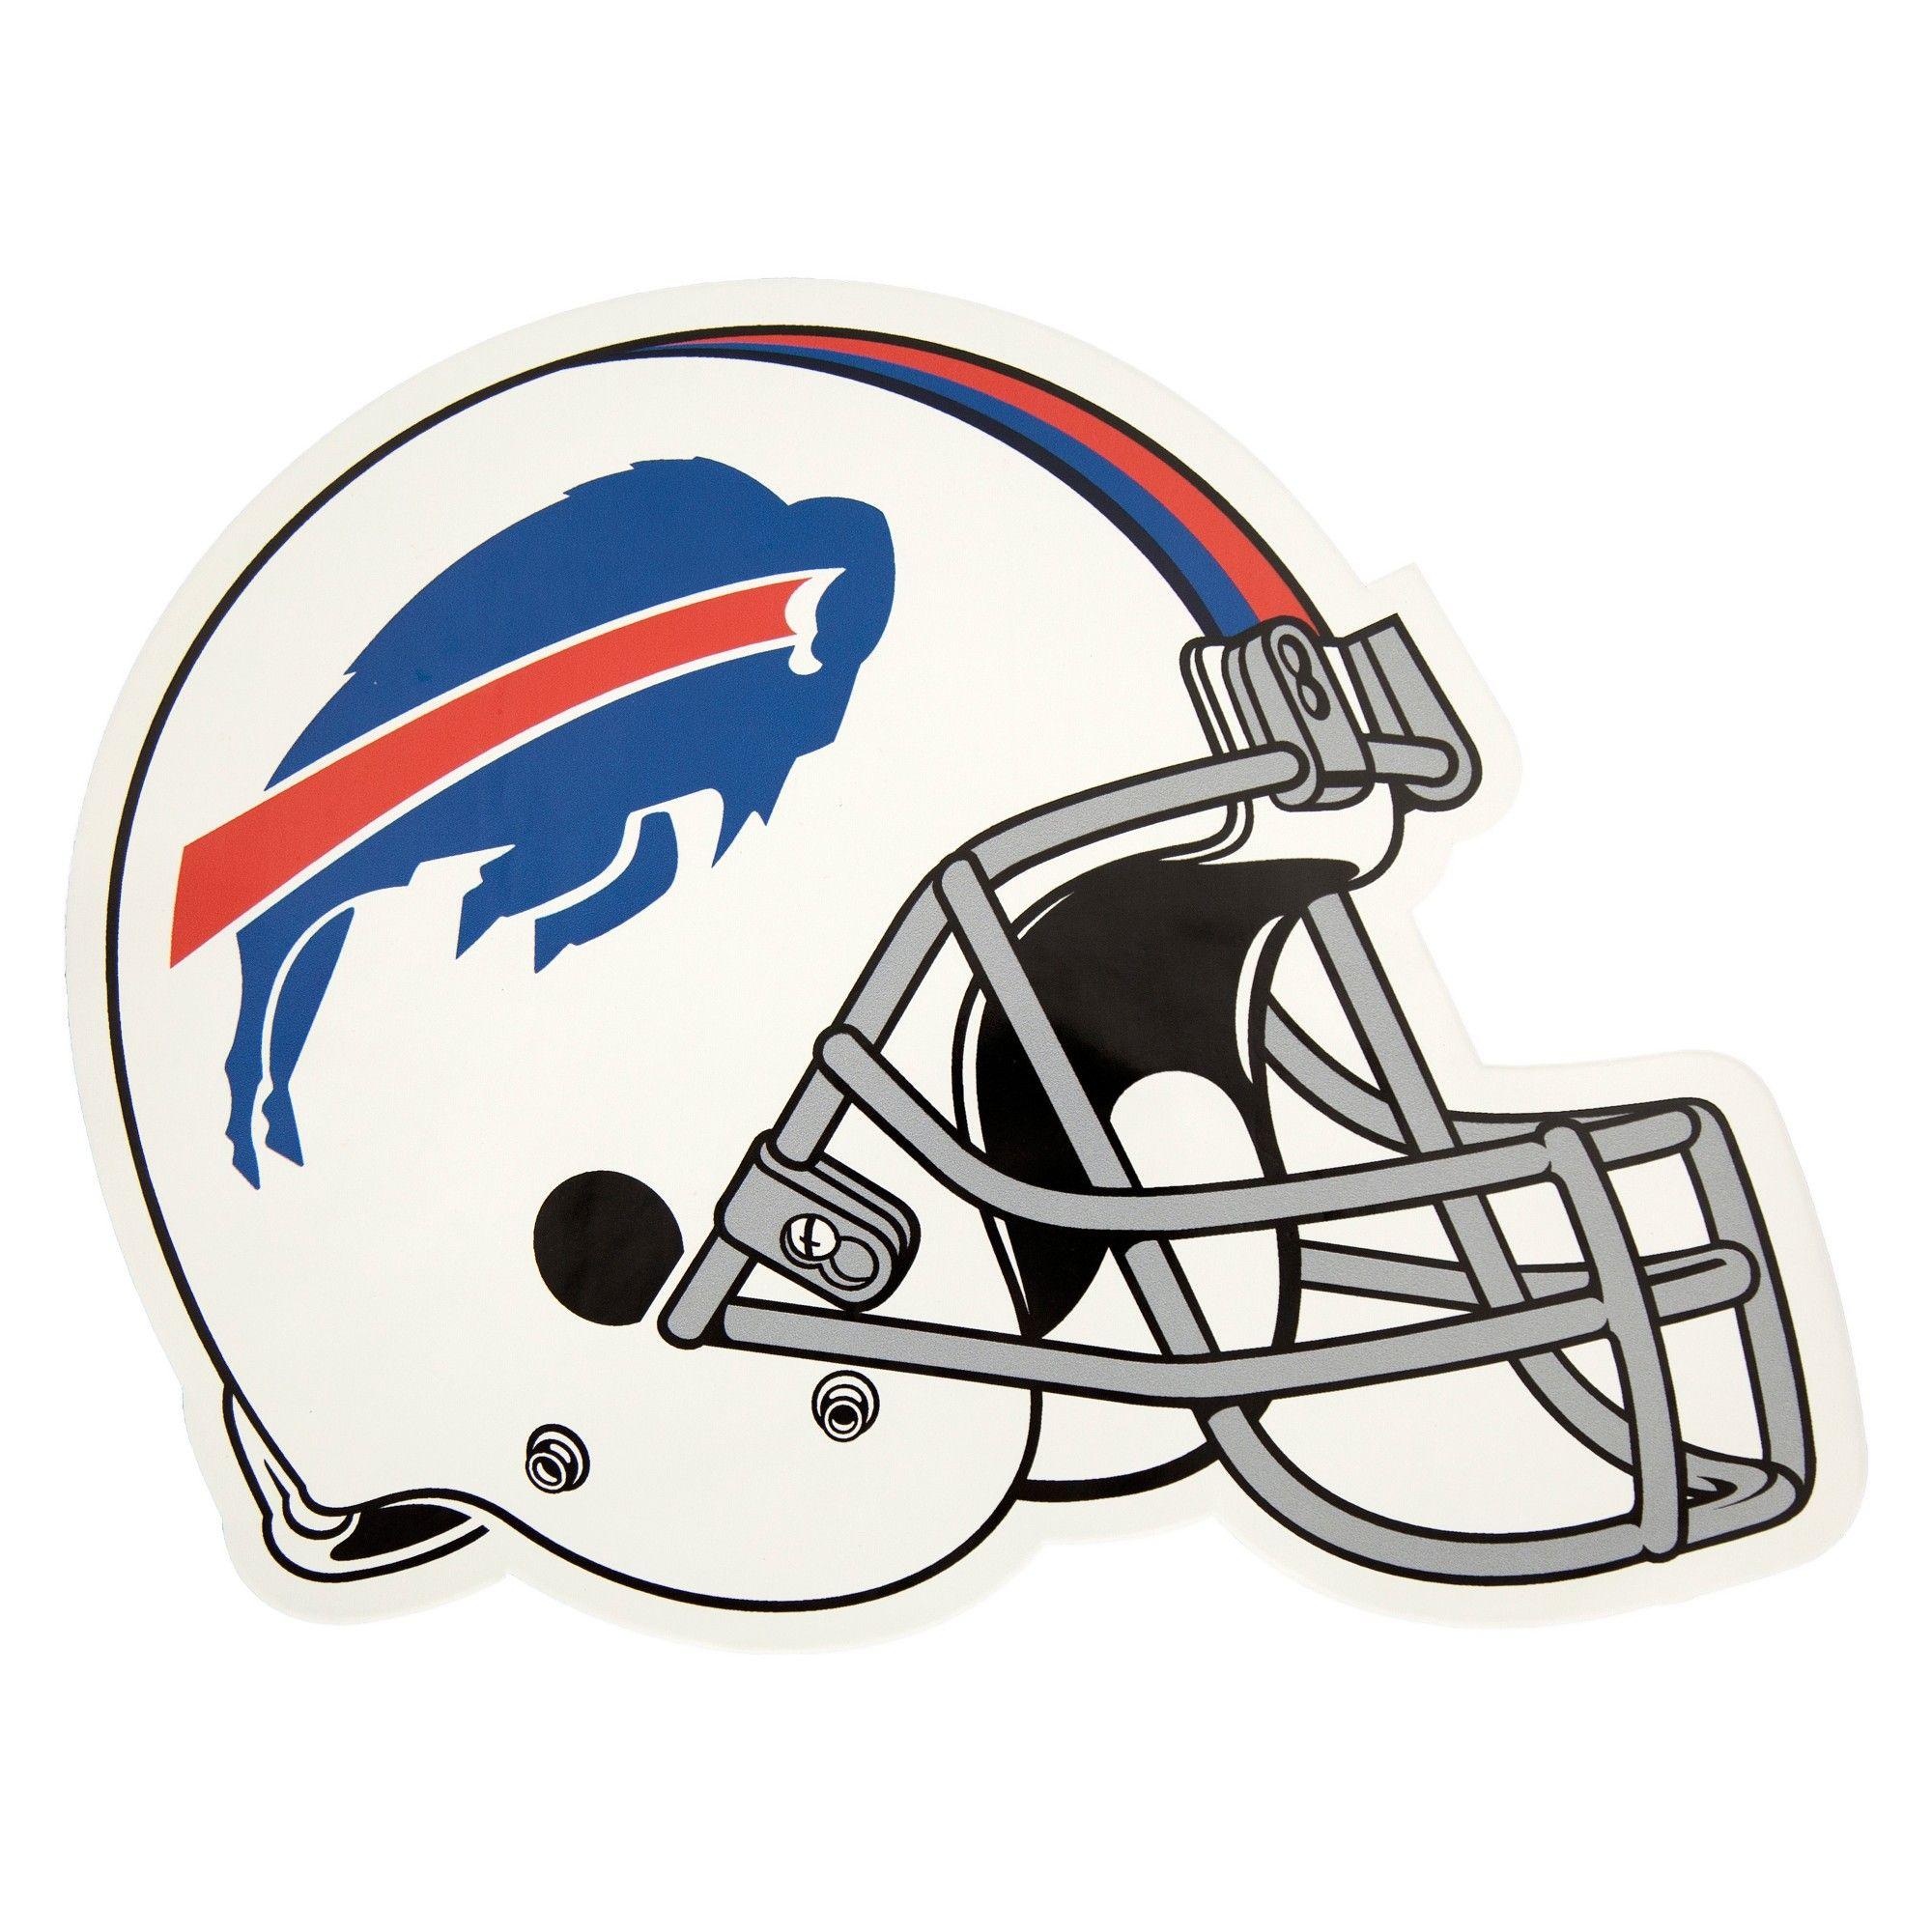 Bills Small Logo - NFL Buffalo Bills Small Outdoor Helmet Decal. Products